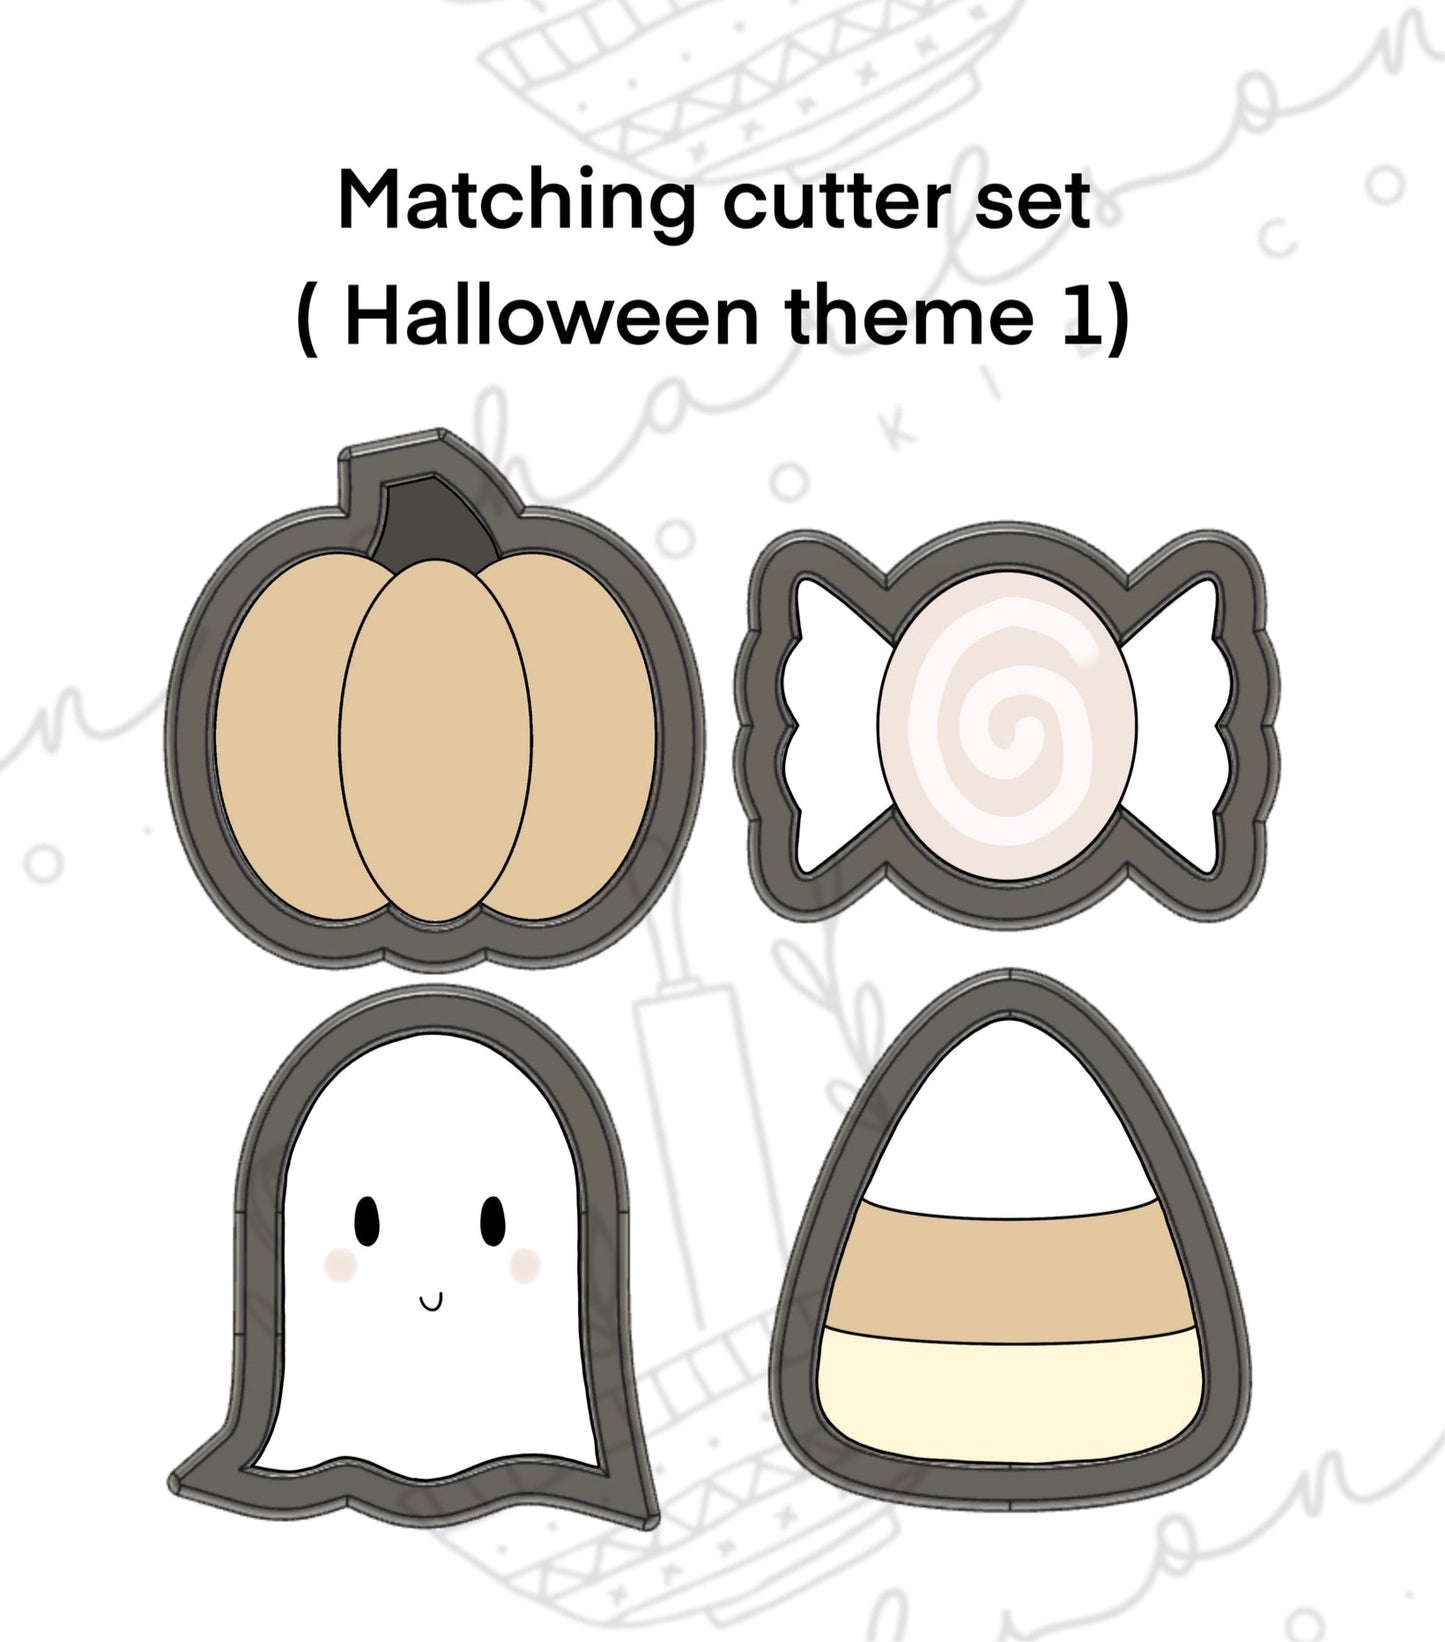 Happy Halloween tags / Instant digital download